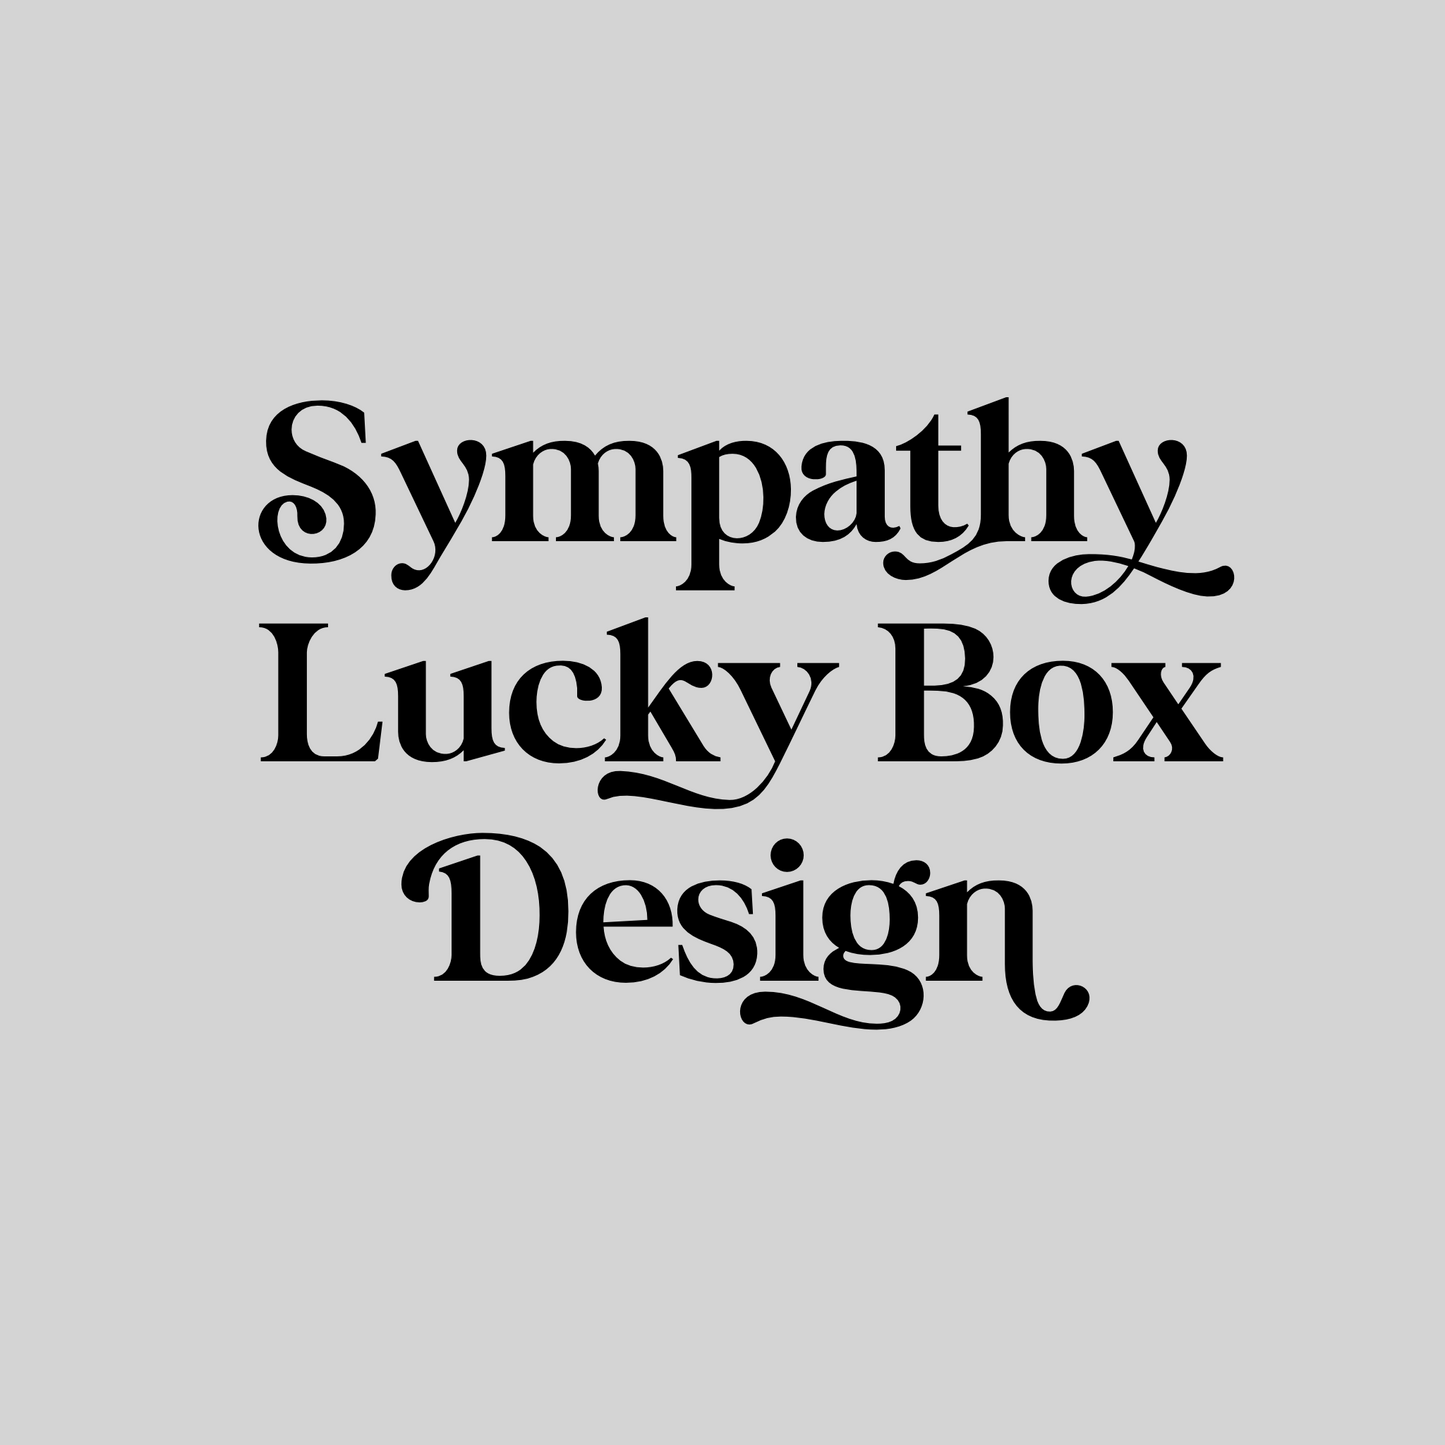 Sympathy Lucky Box